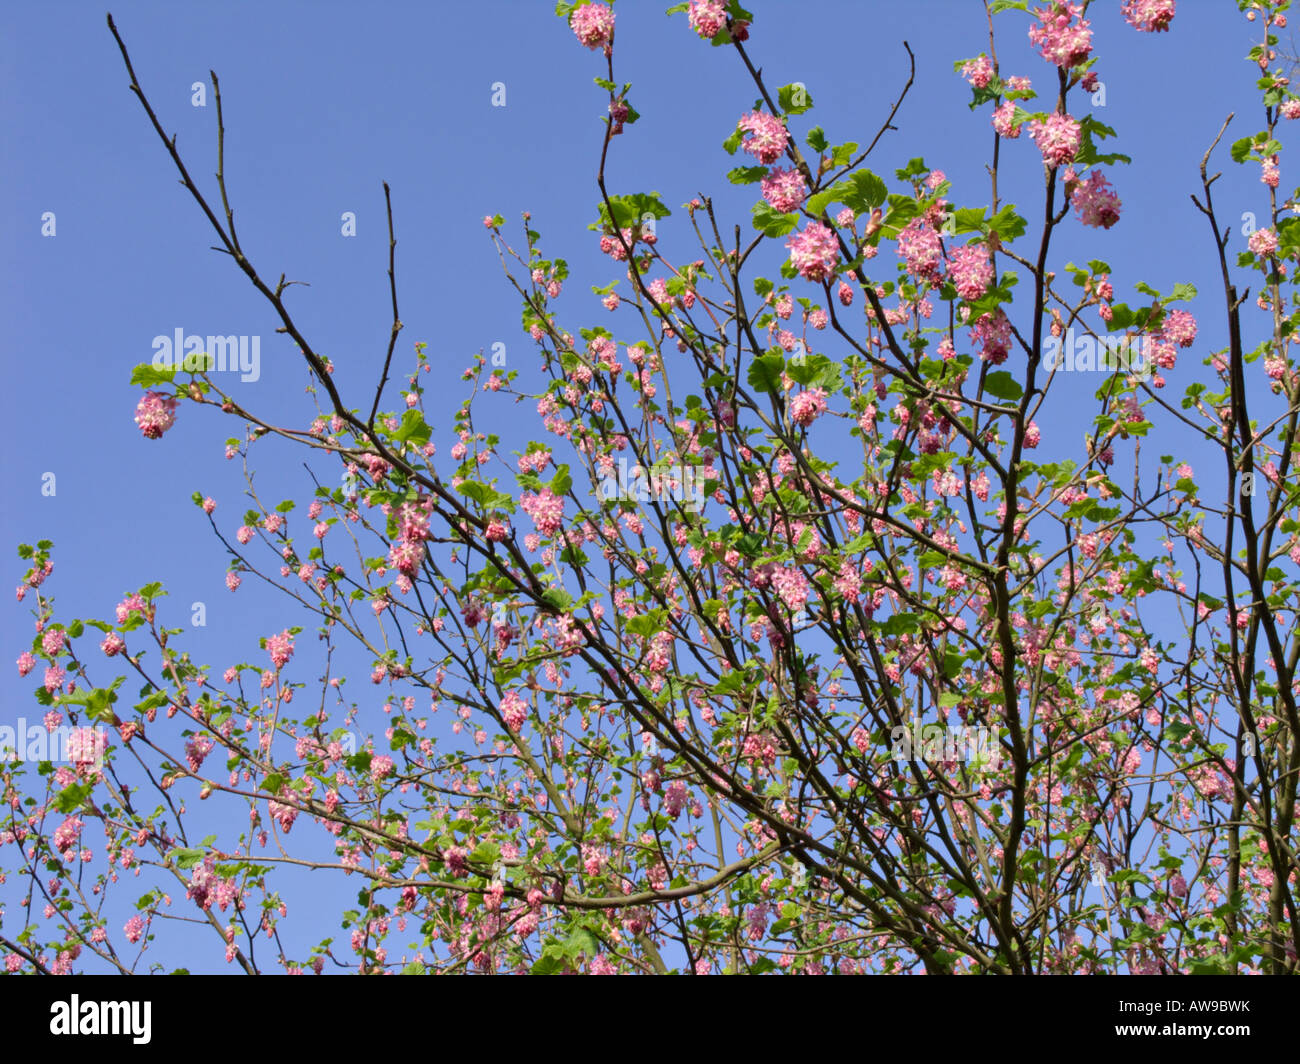 Flowering currant (Ribes sanguineum) Stock Photo